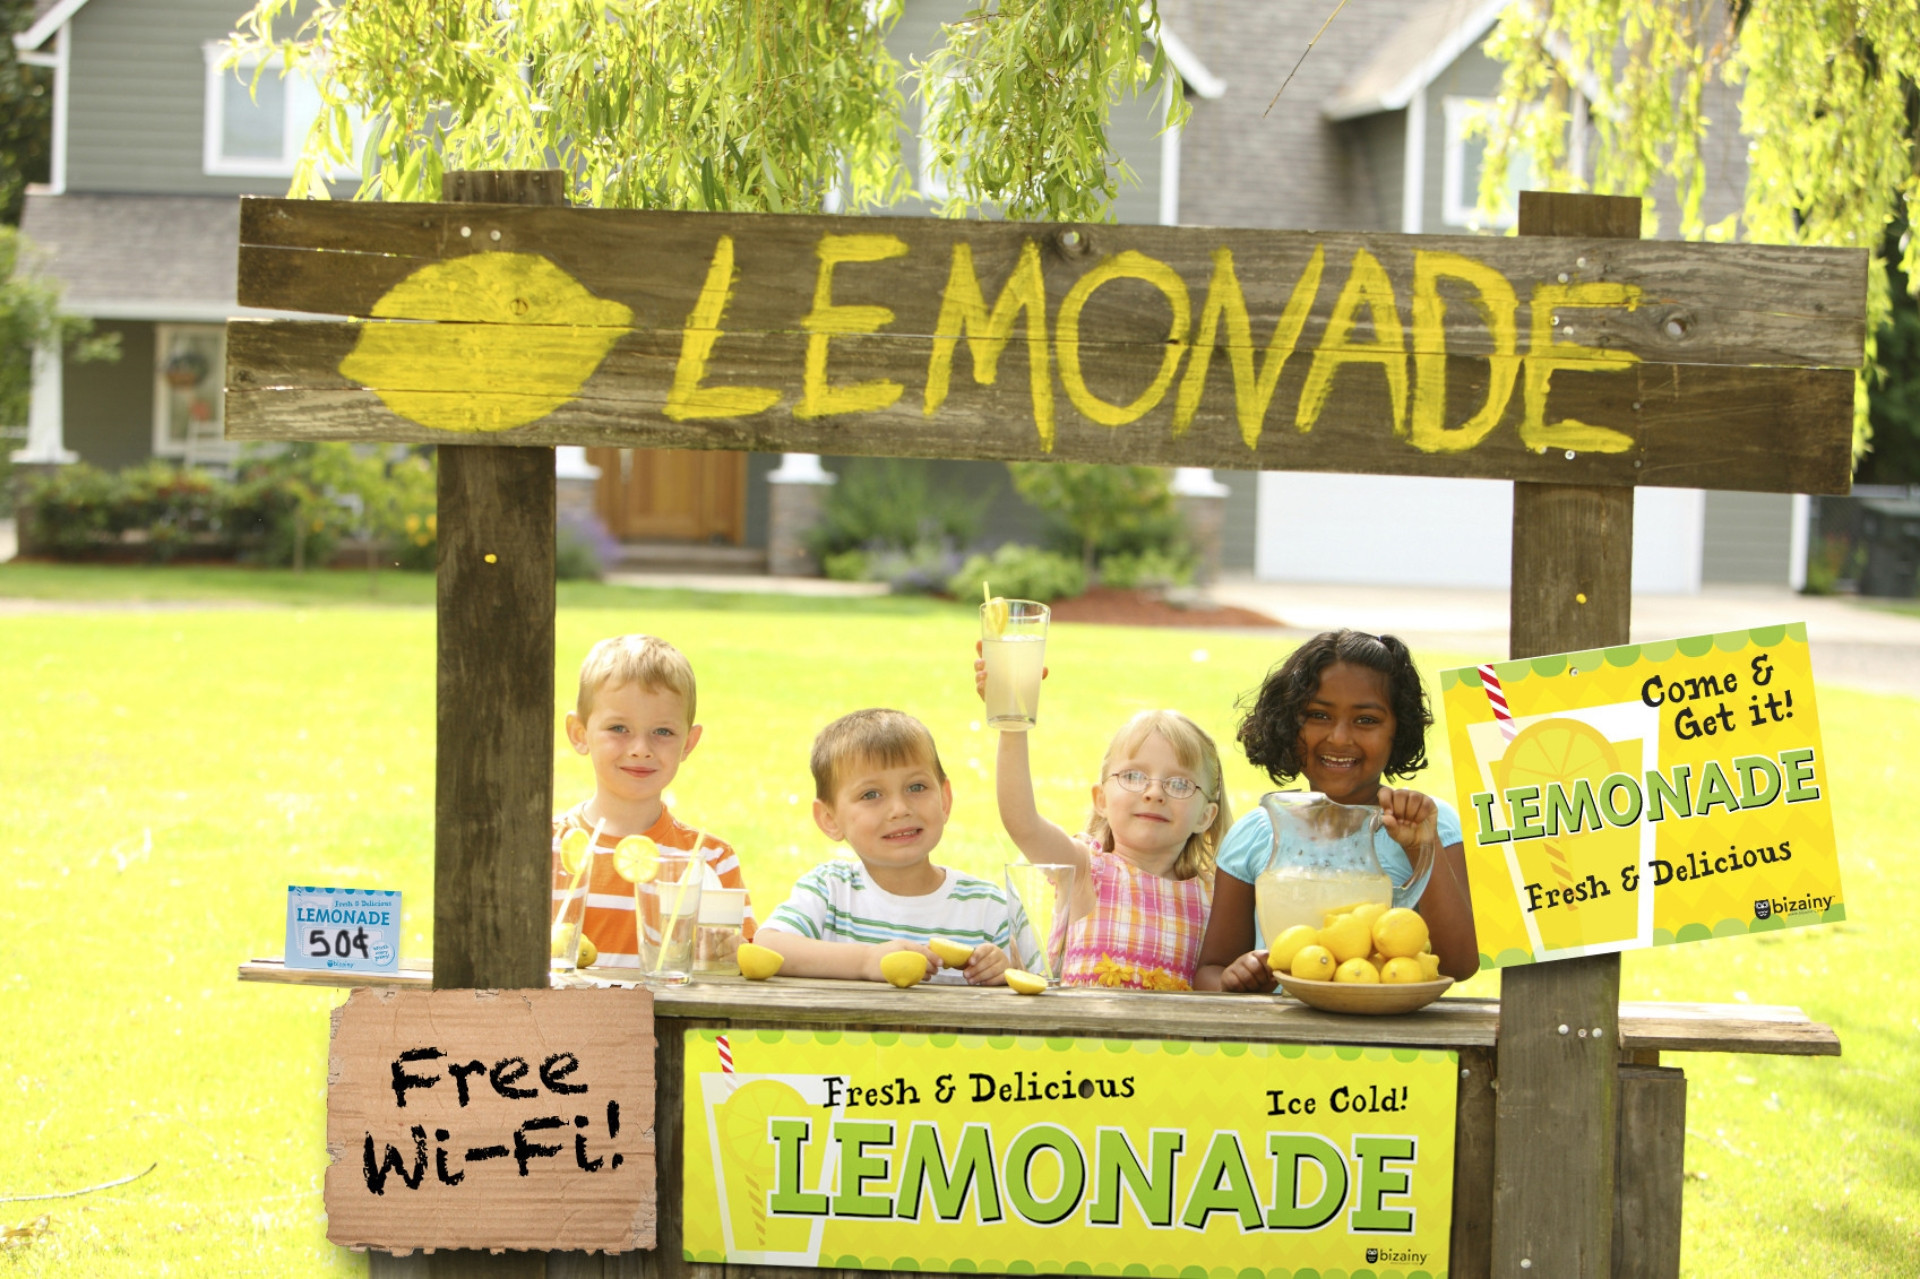 5._Bizainy_Lemonade_Stand_Start-Up_Kit-_Kids_using_product_at_lemonade_sale